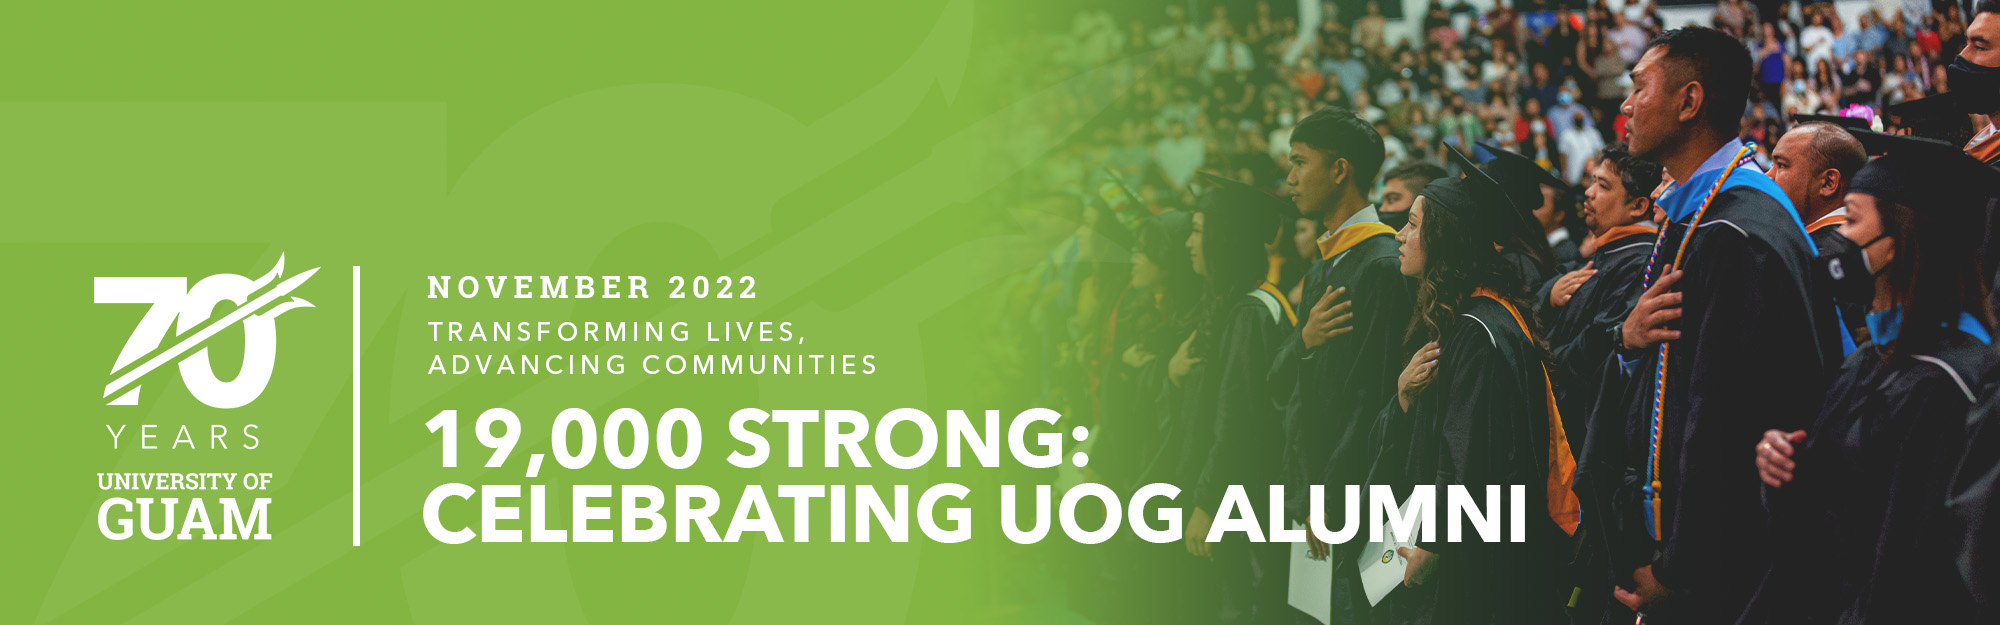 70 years of UOG, November 2022: Transforming Lives, Advancing Communities - 19,000 Strong: Celebrating UOG